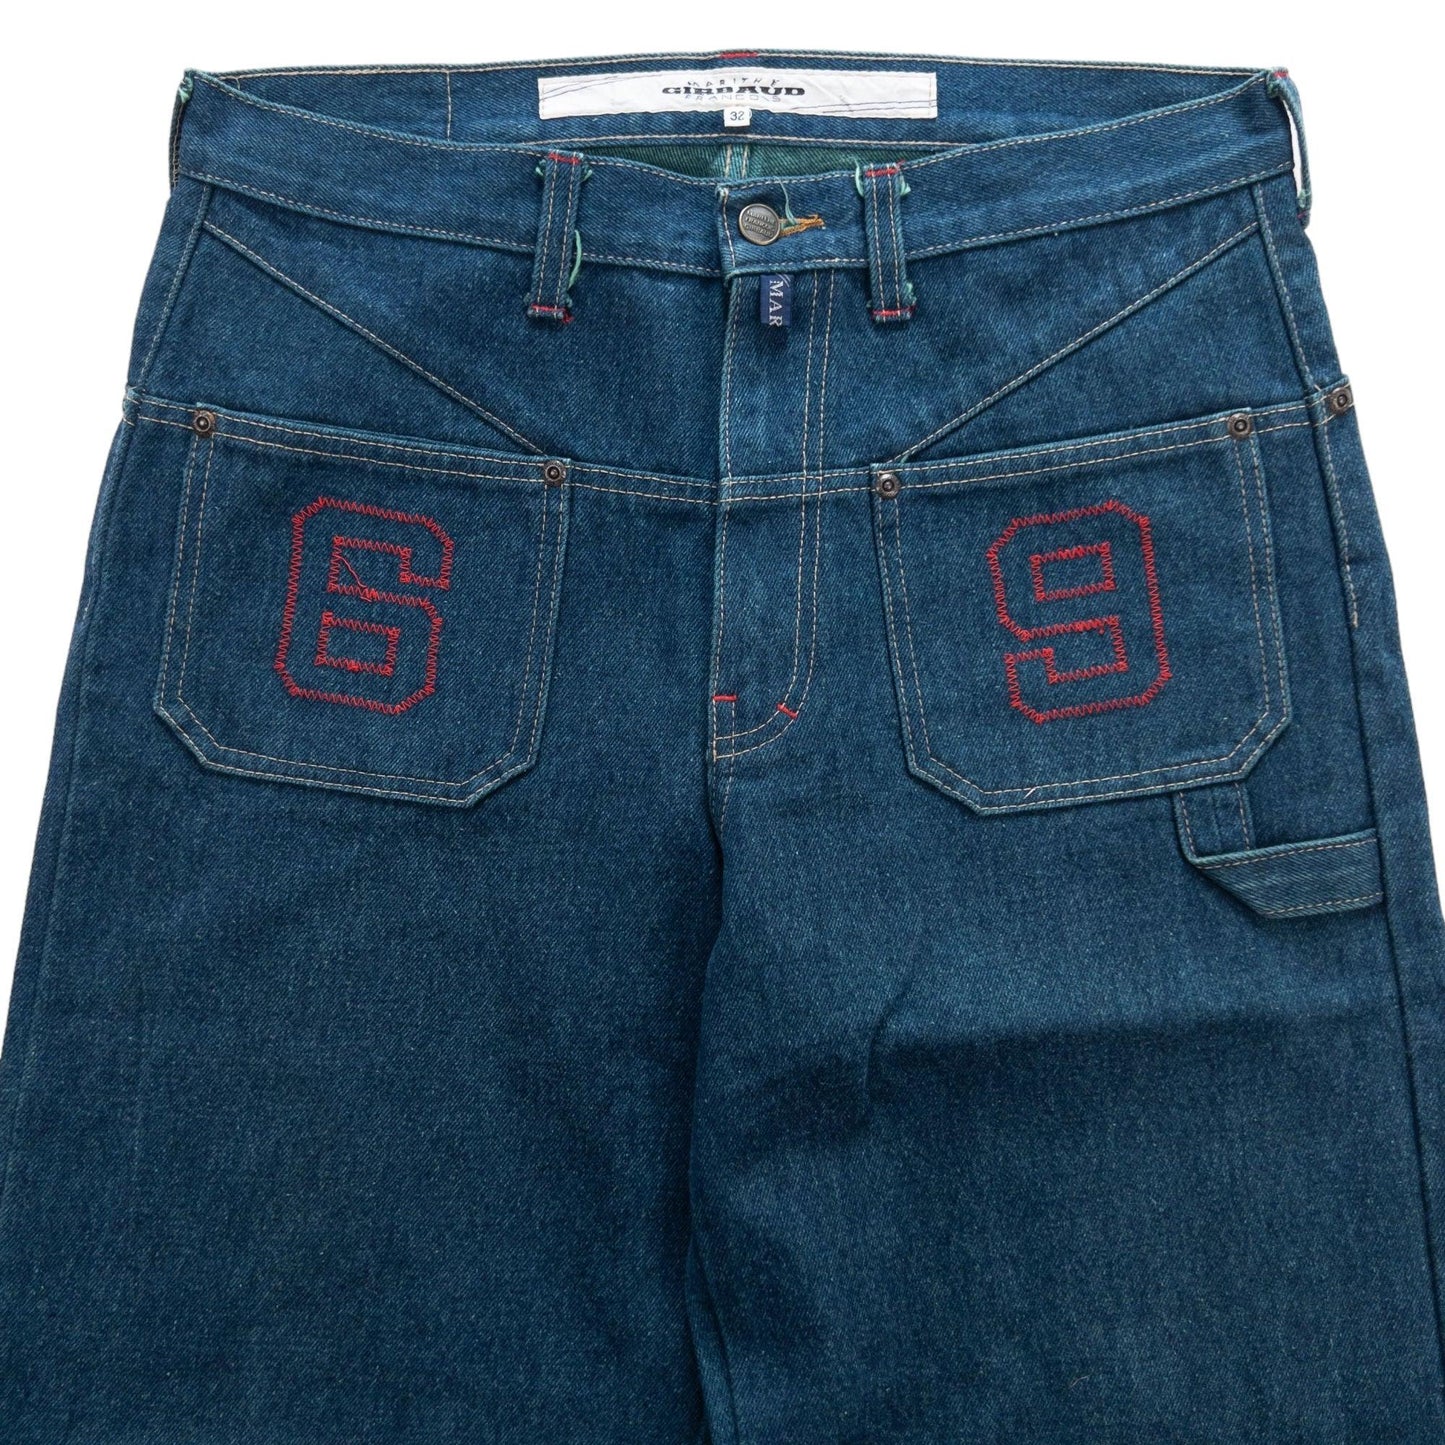 Vintage Marithe + Francois Girbaud Reverse Pocket Jeans Size W32